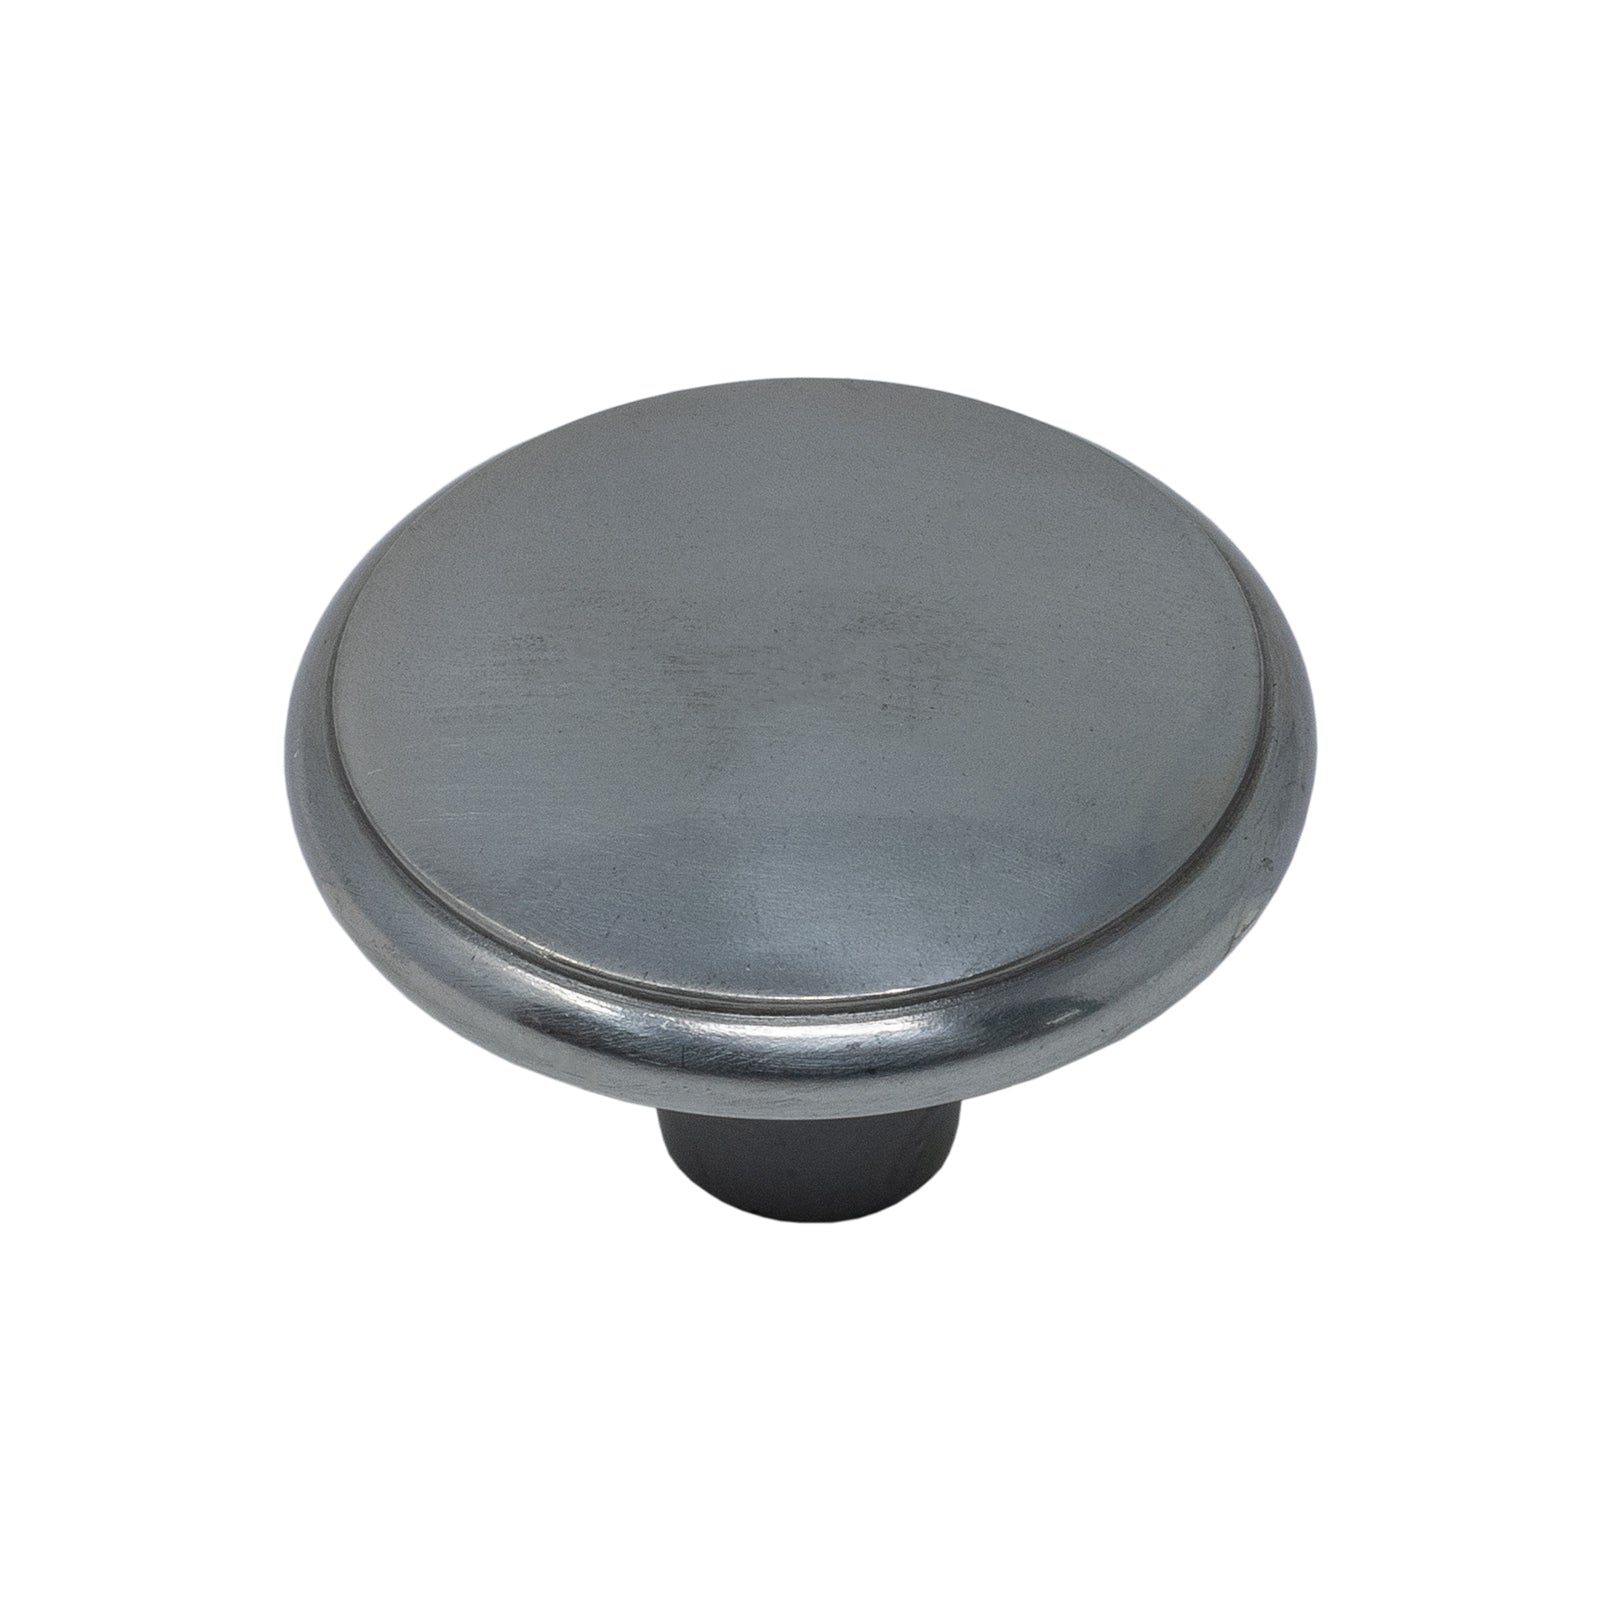 Medium cast iron button cabinet knobs SHOW